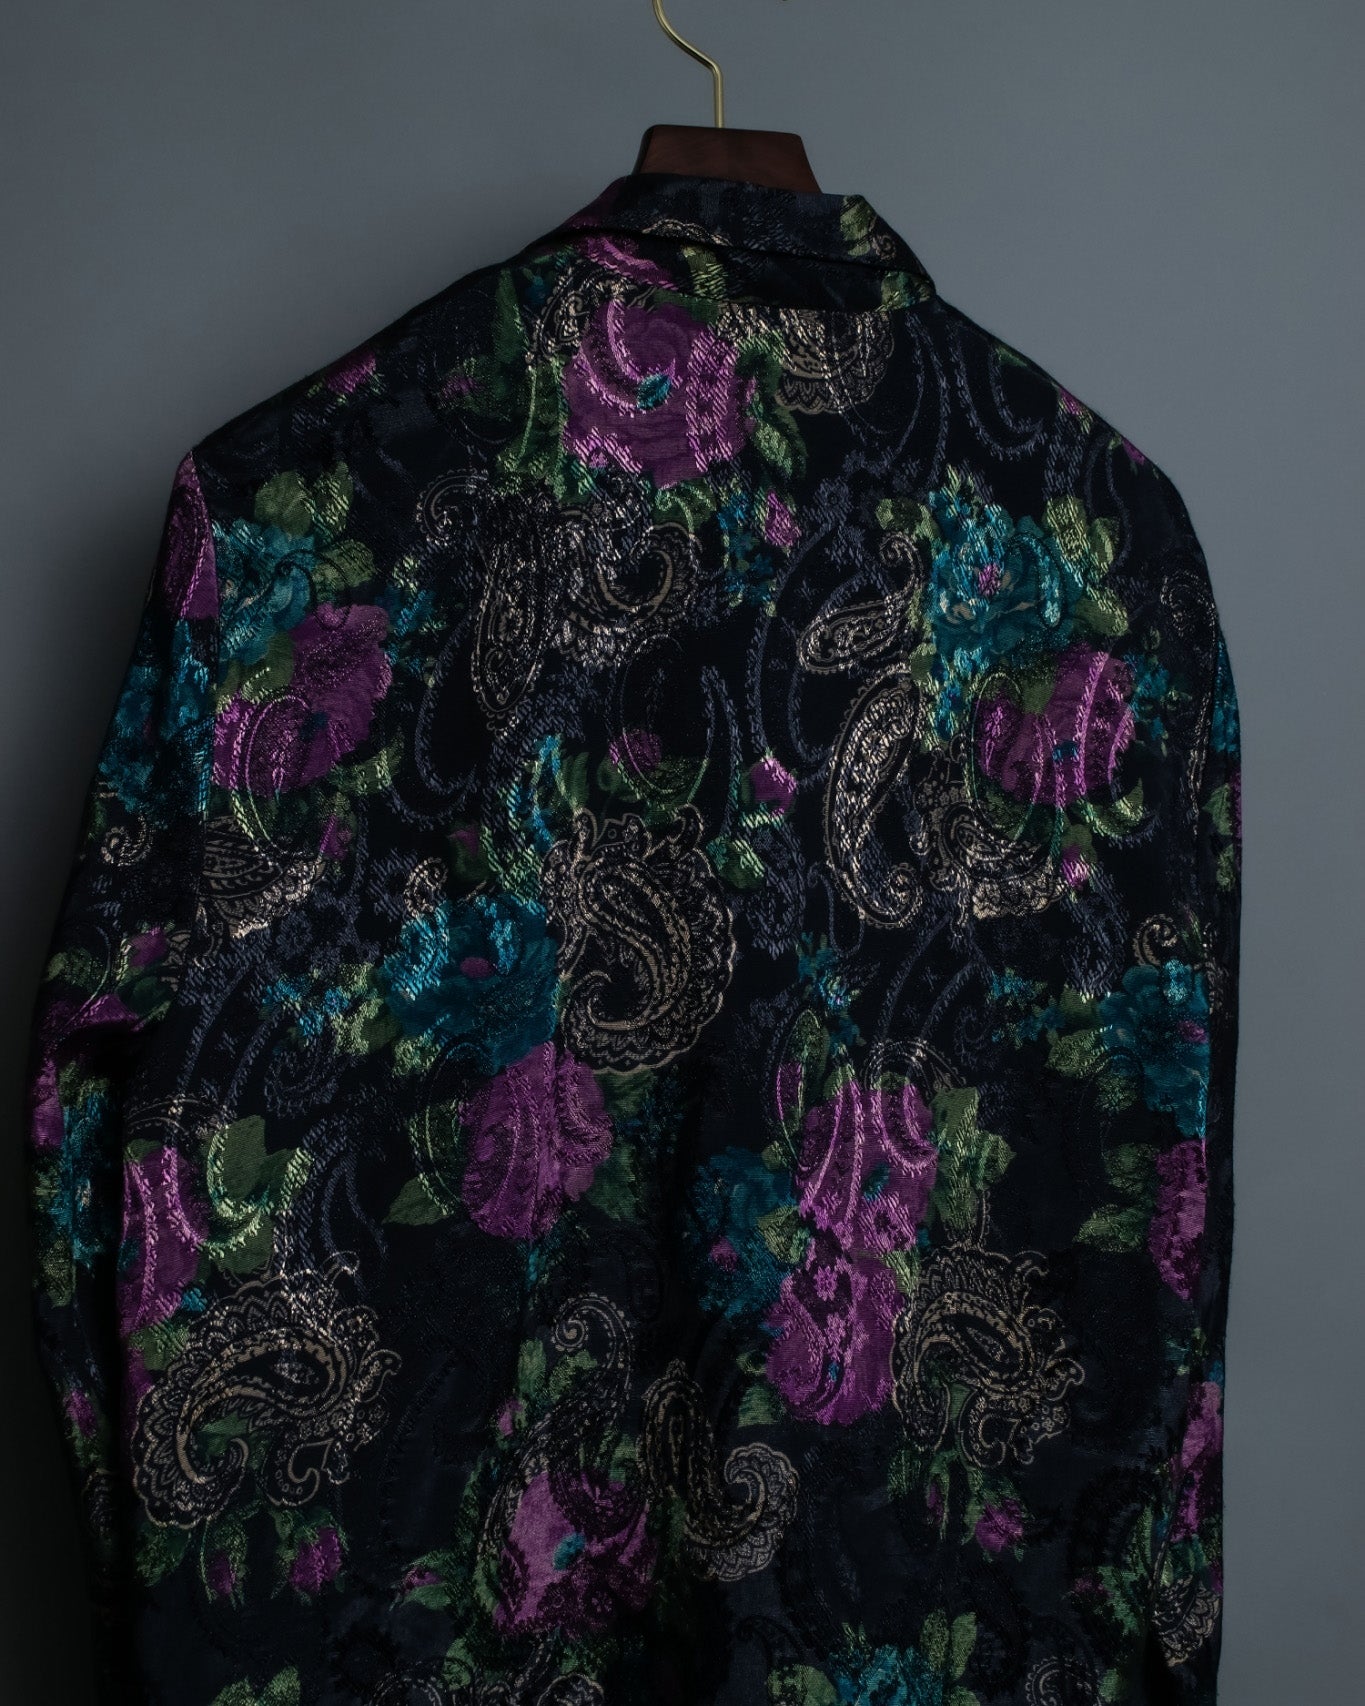 Gorgeous floral jacket